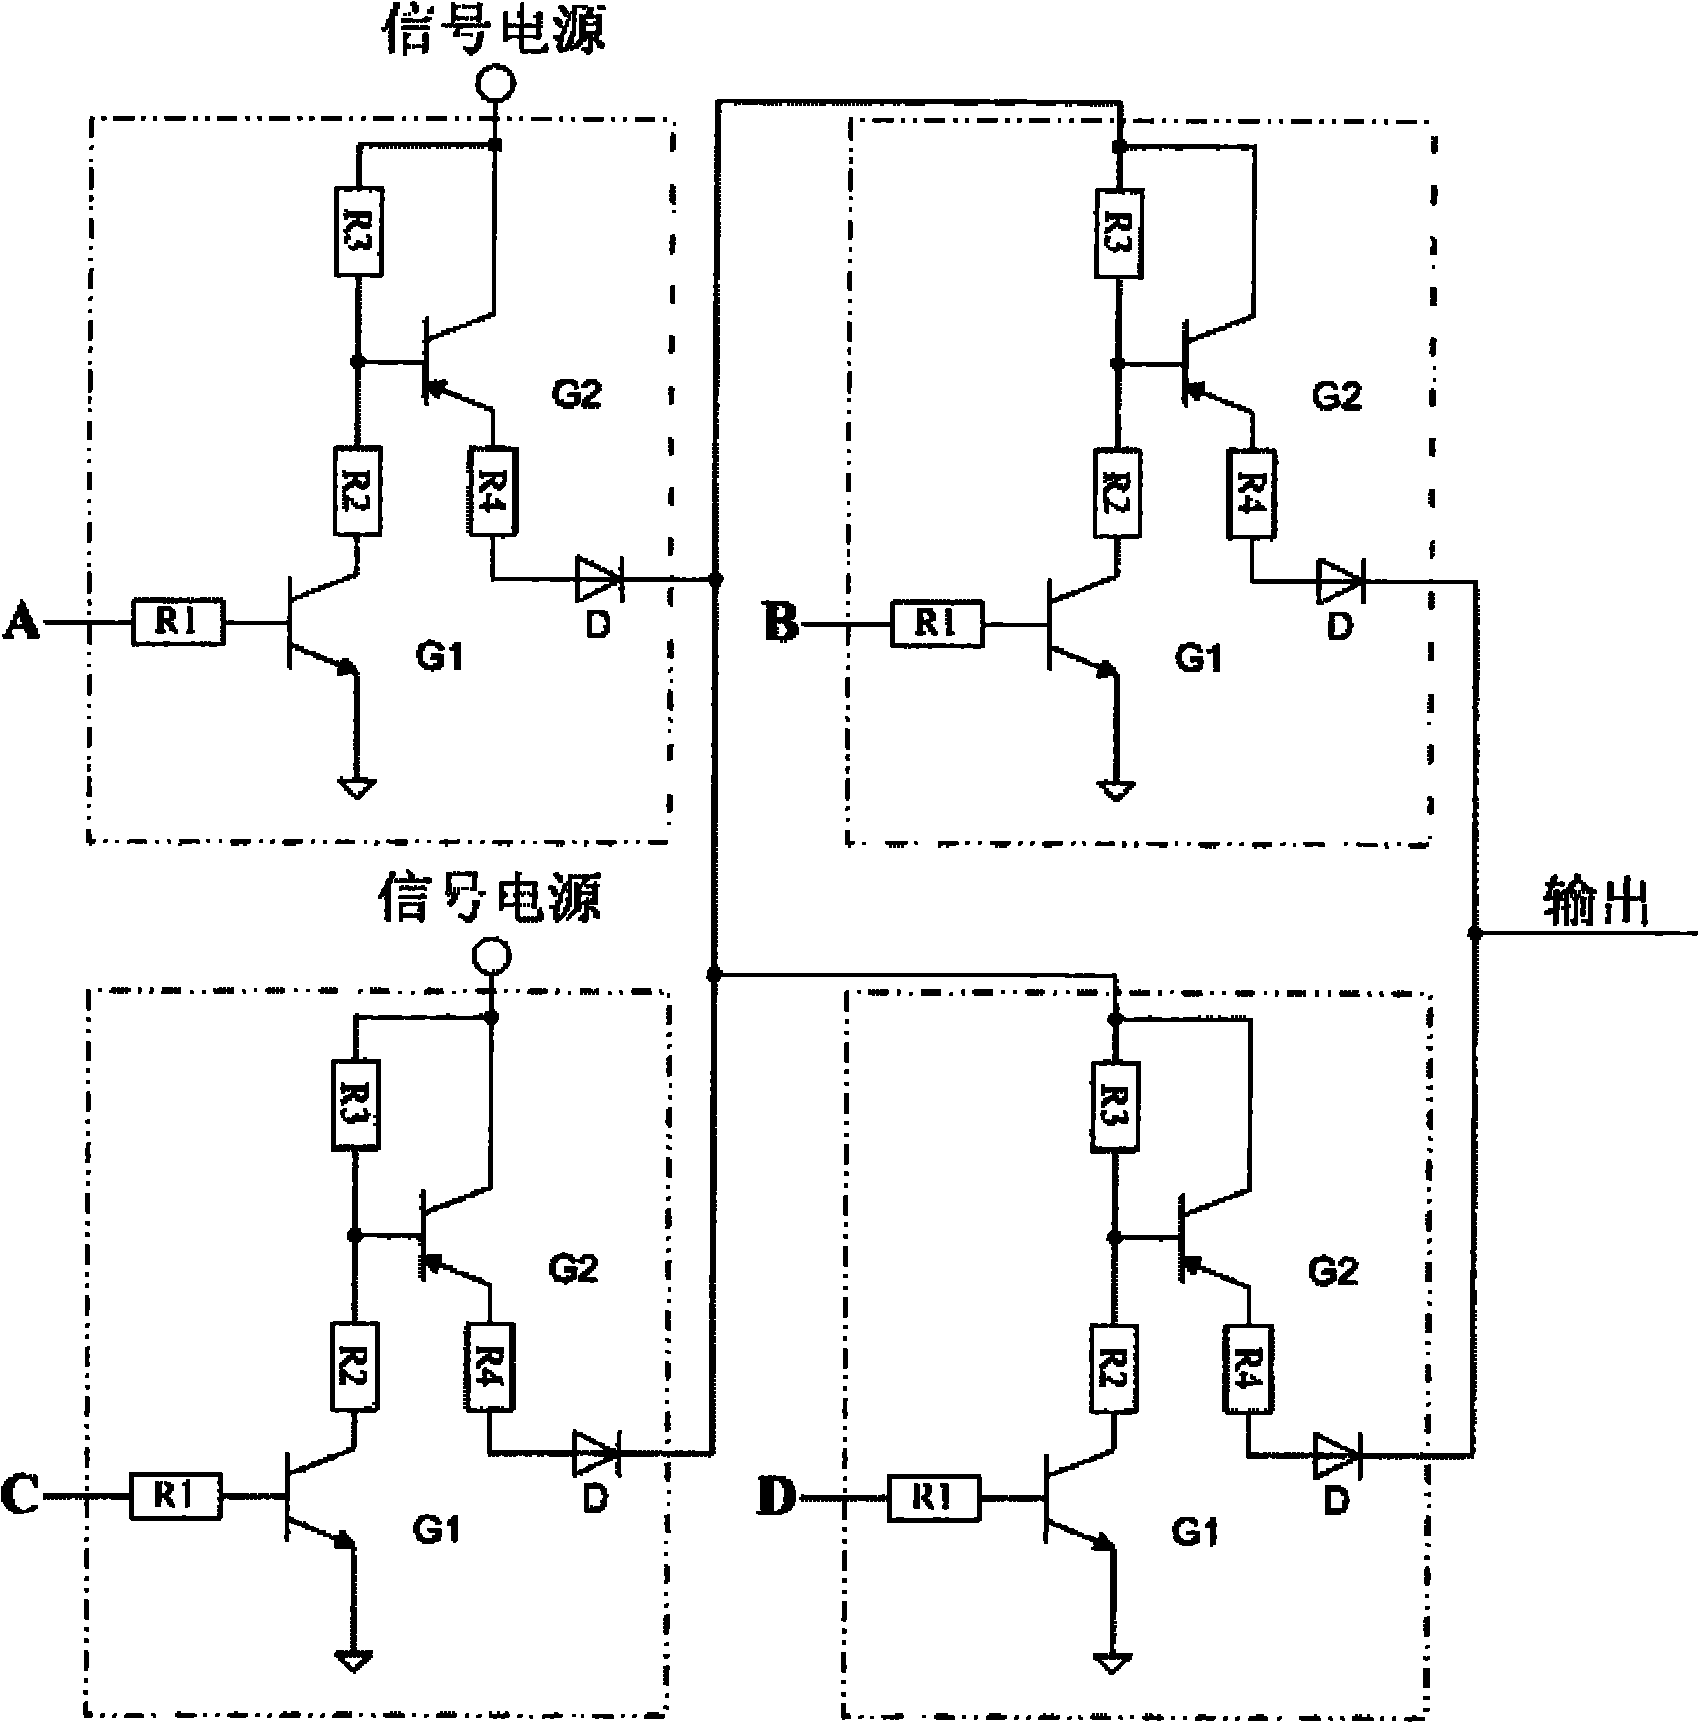 Four-redundancy discrete signal integrated circuit